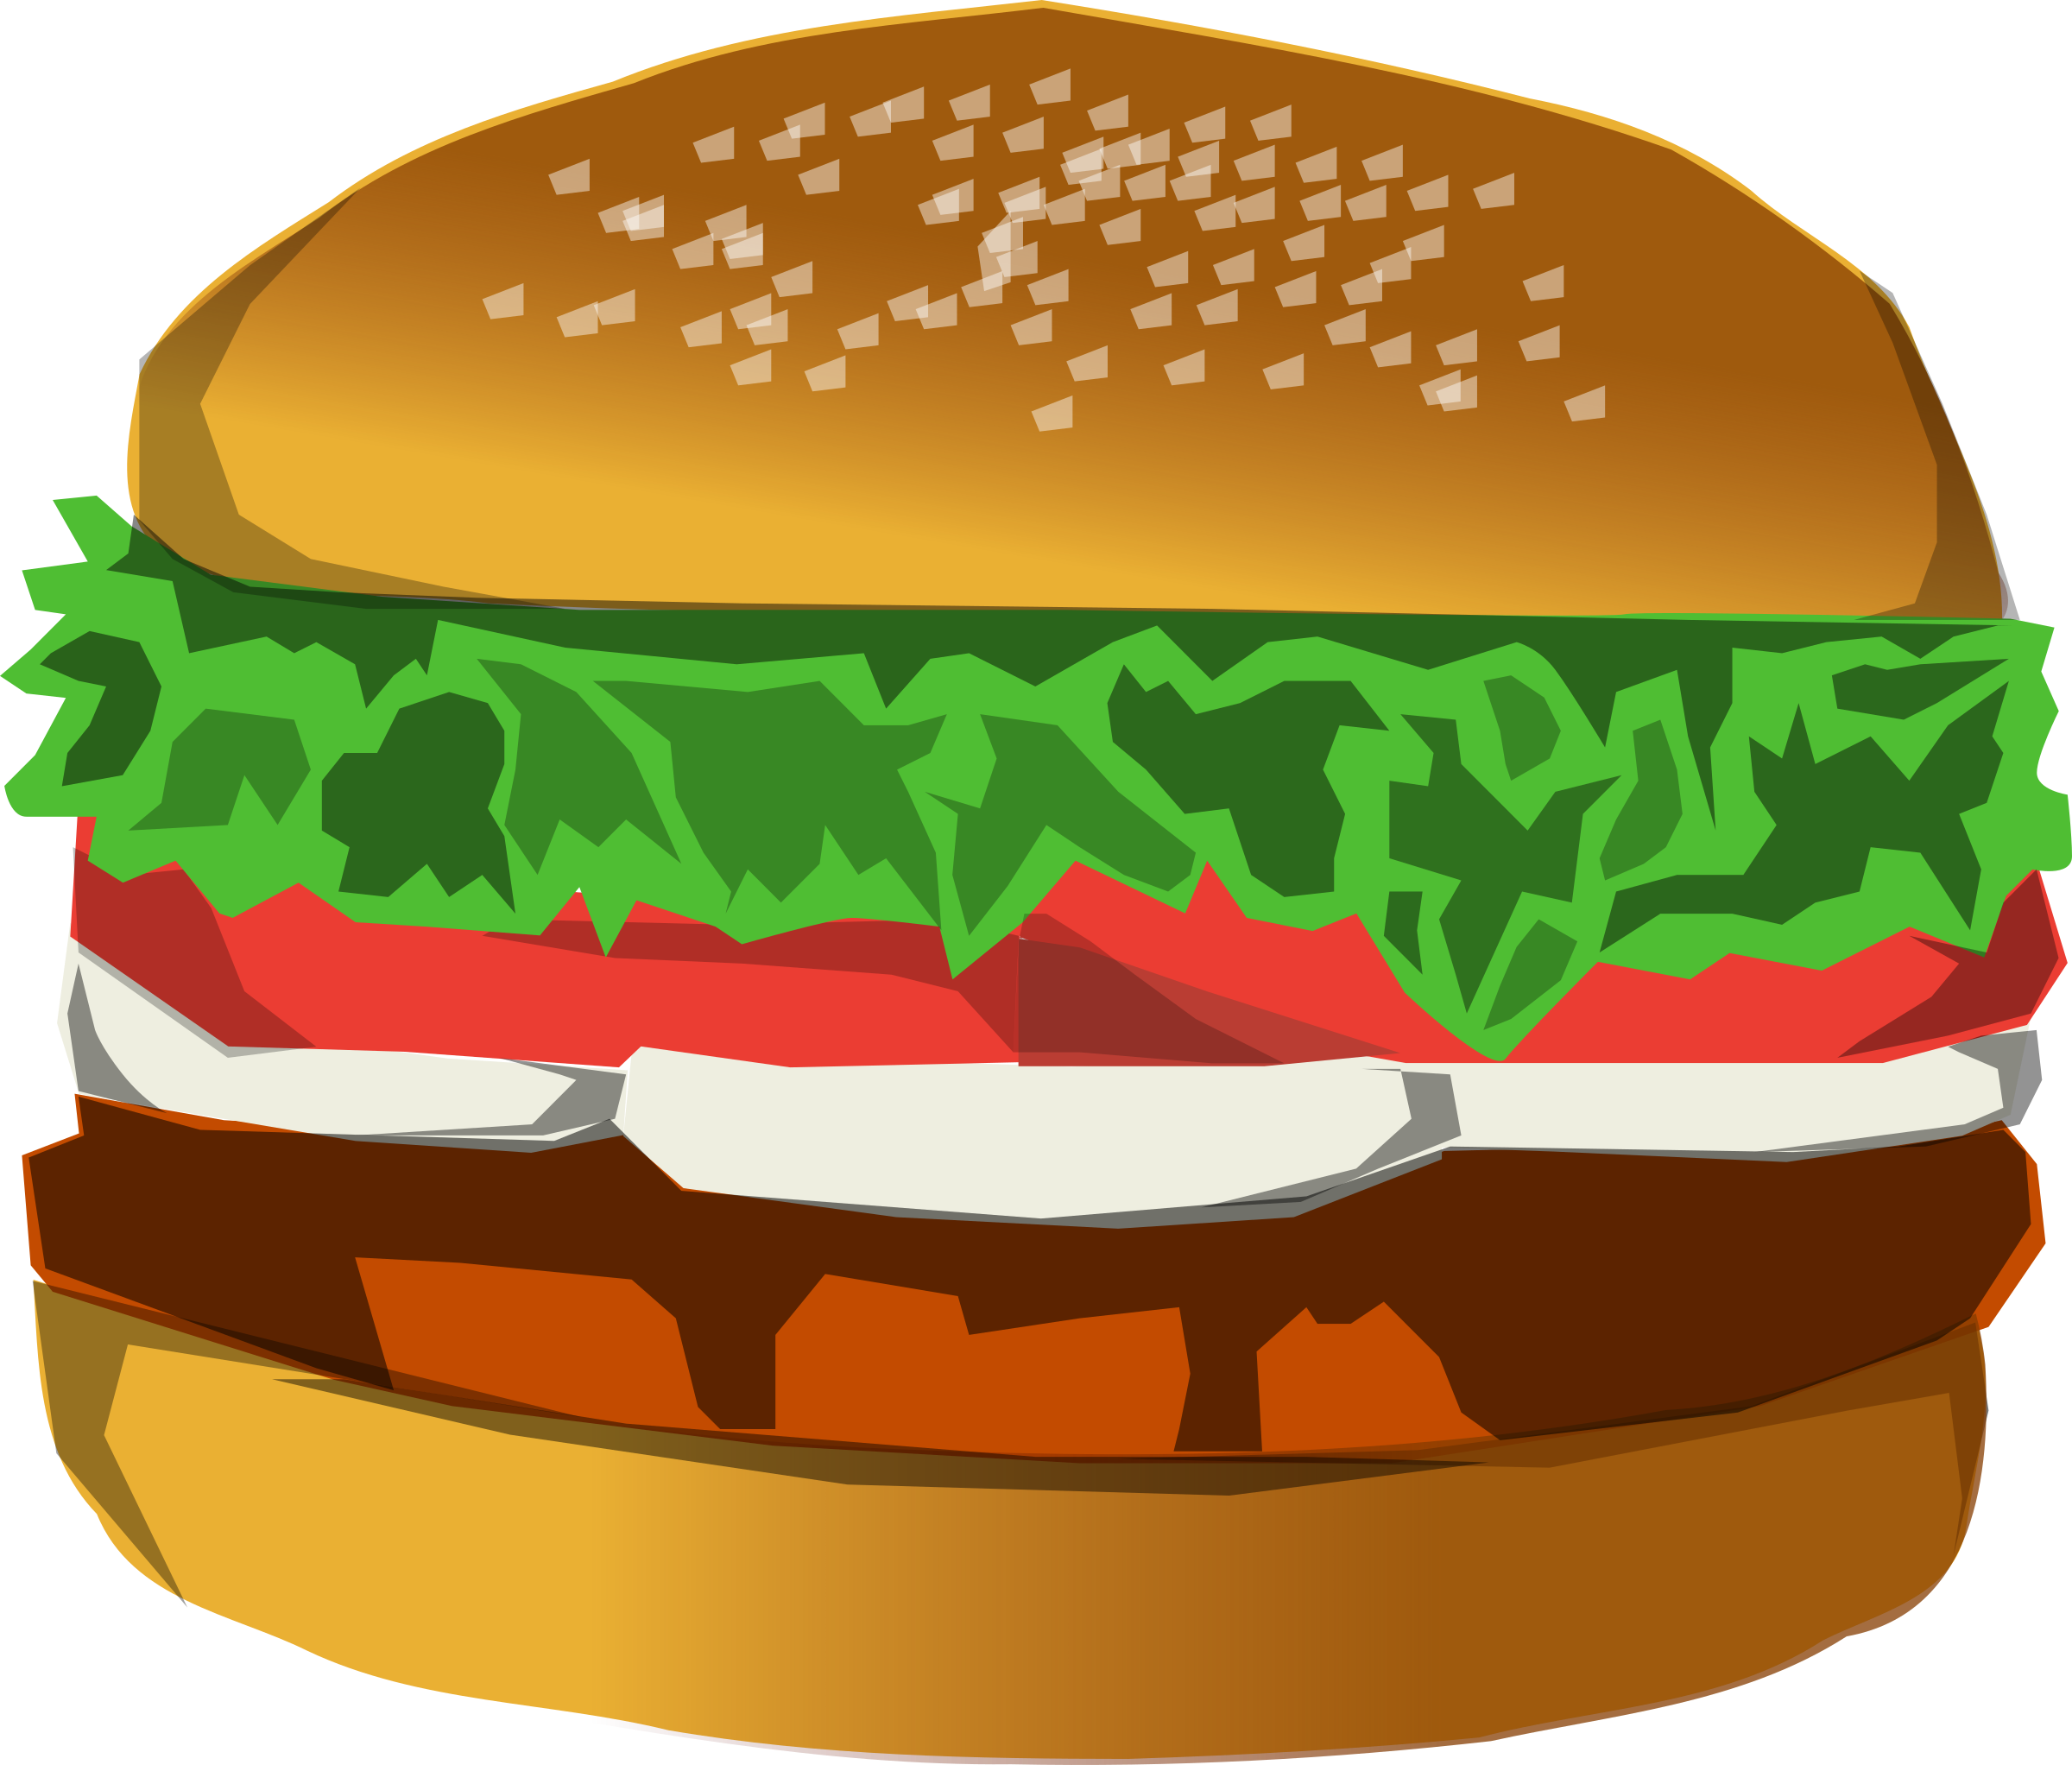 Hamburger veggie burger